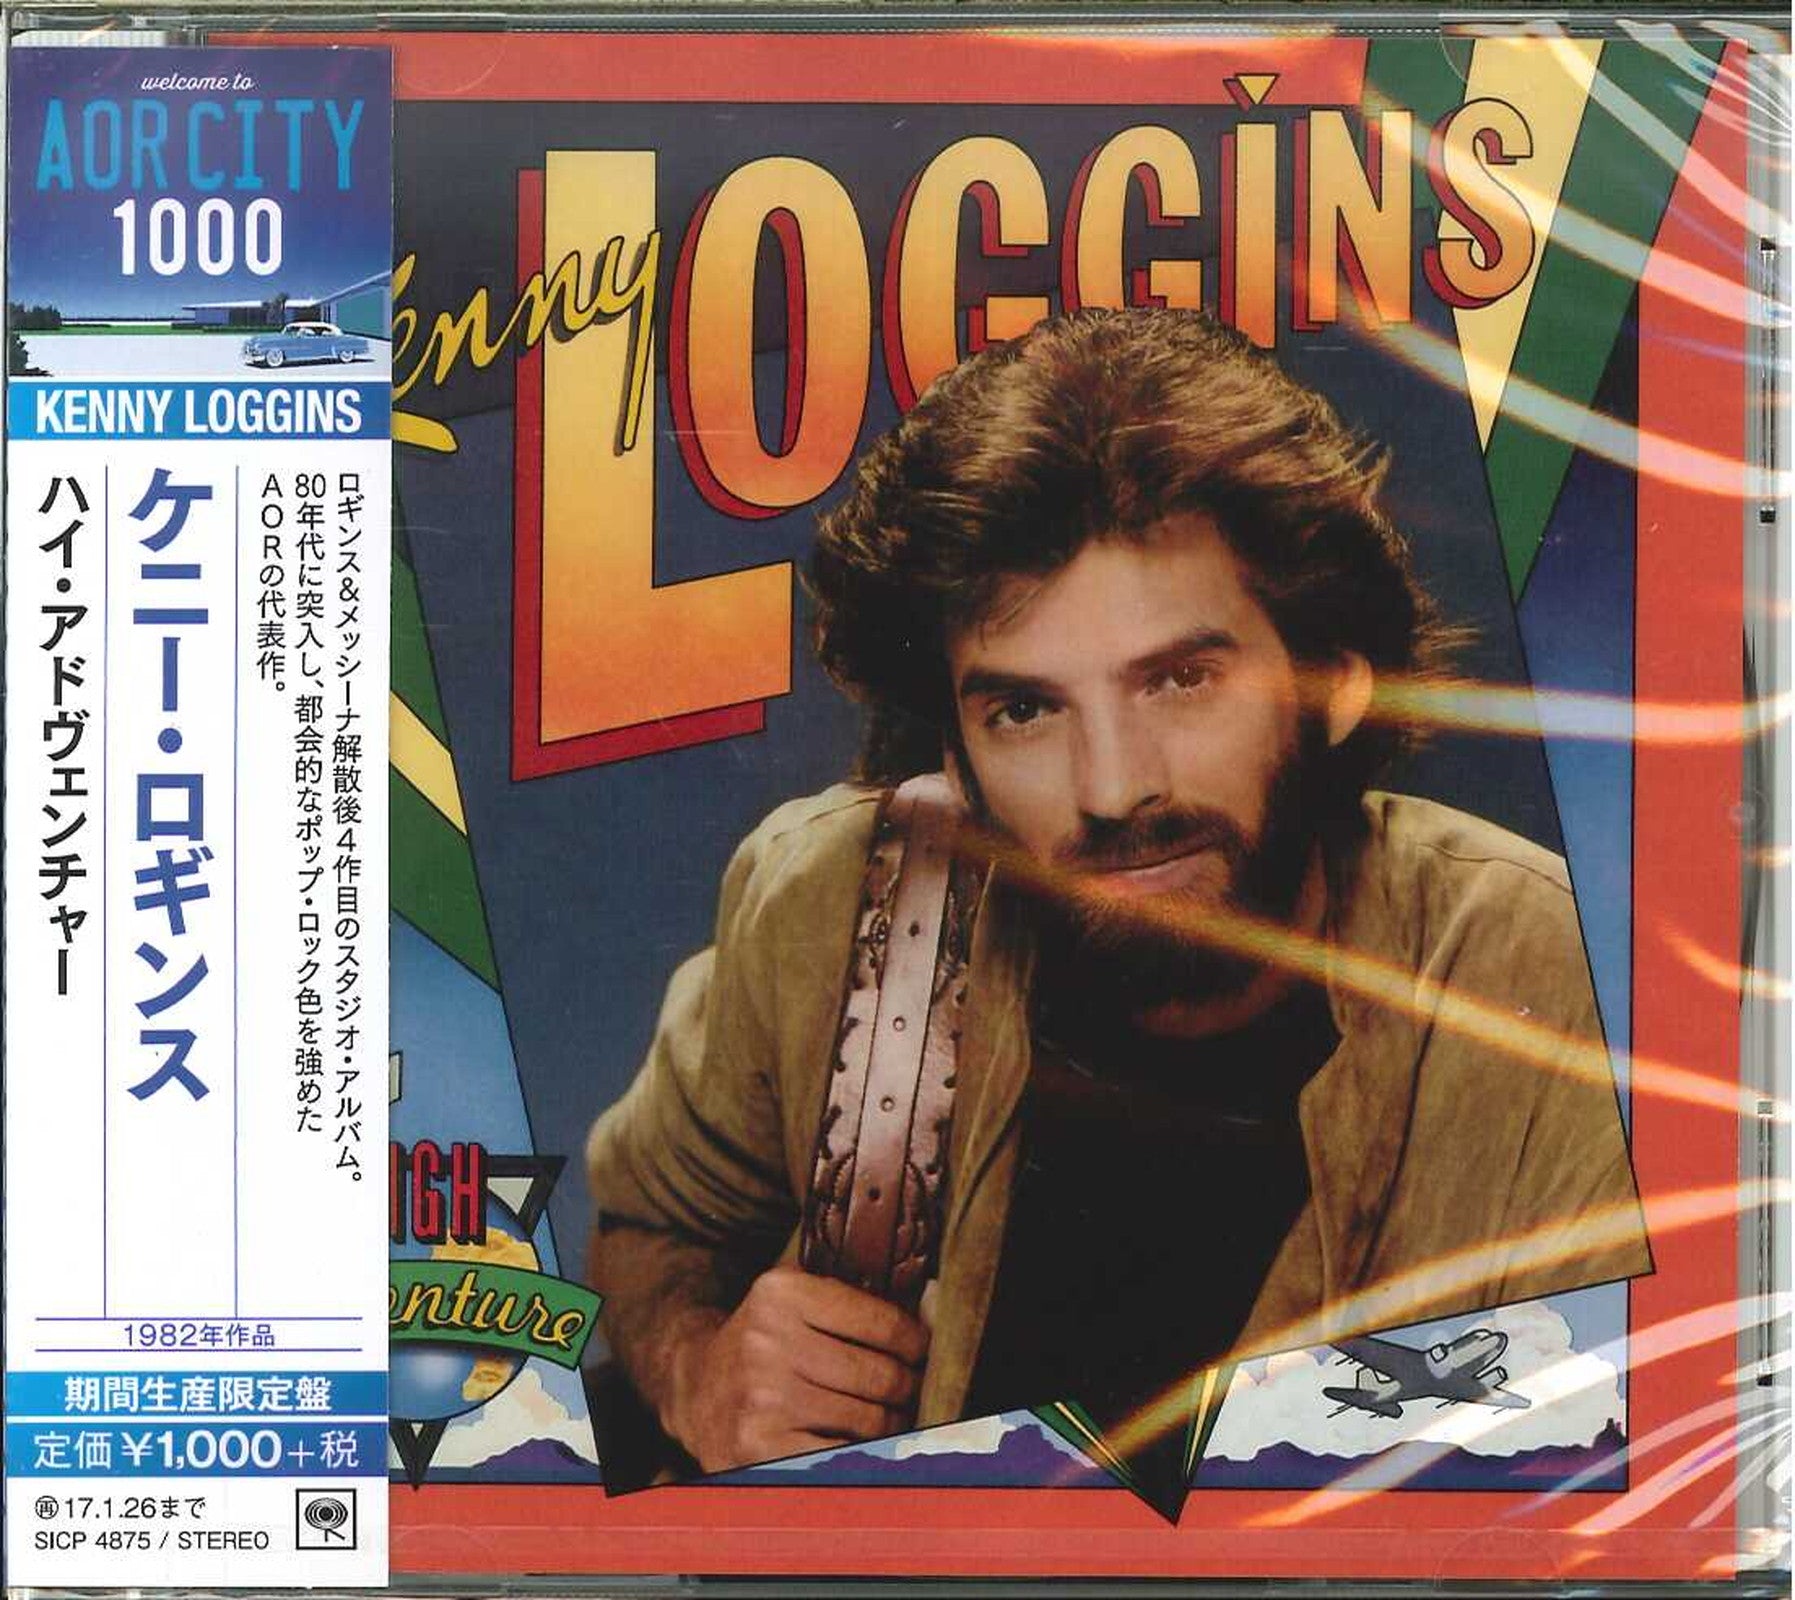 Kenny Loggins - High Adventure - Japan CD – CDs Vinyl Japan Store